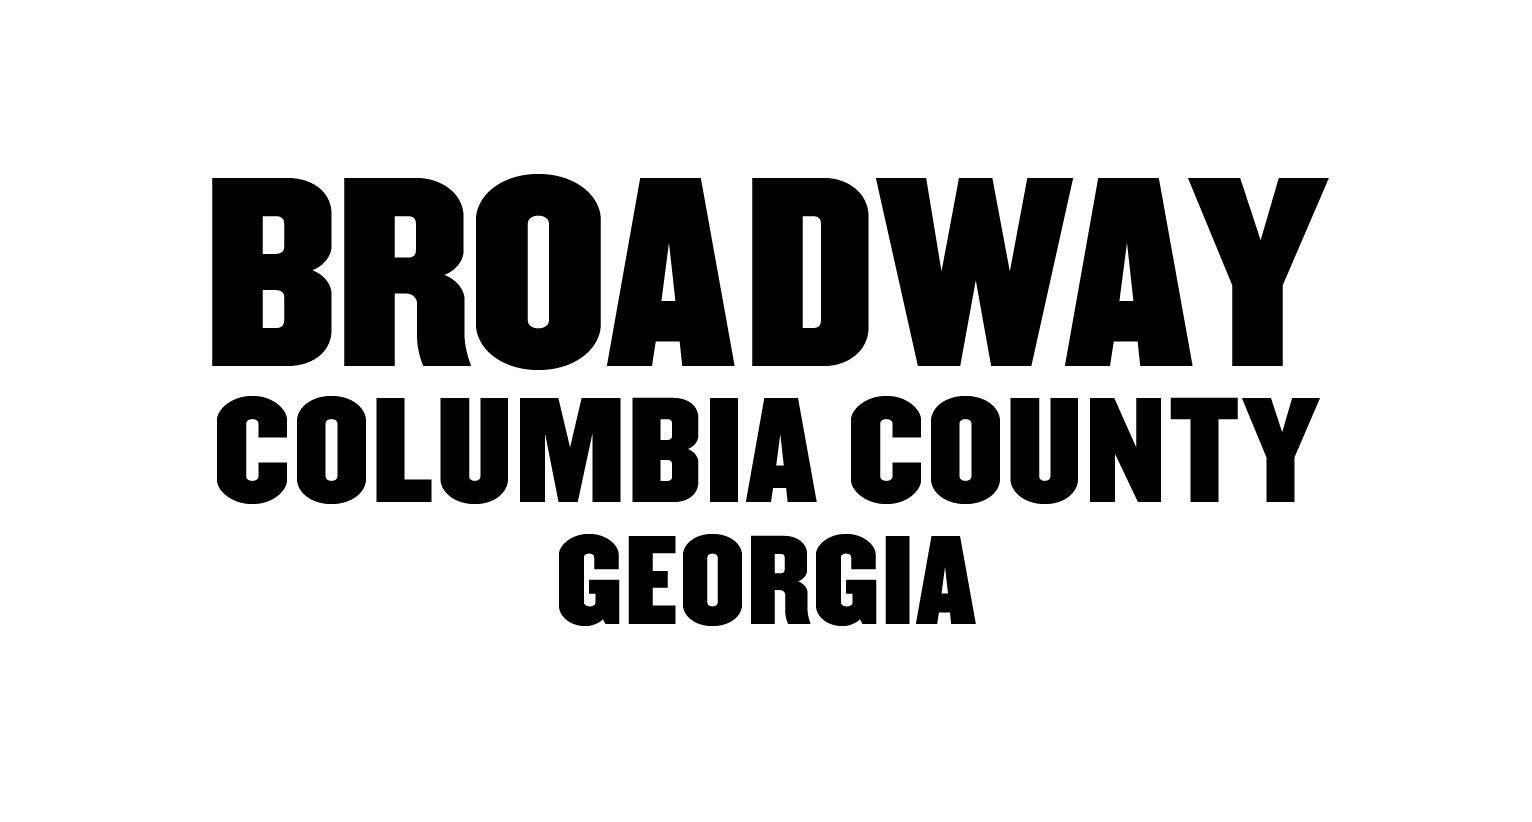 Broadway in Columbia Country, Georgia